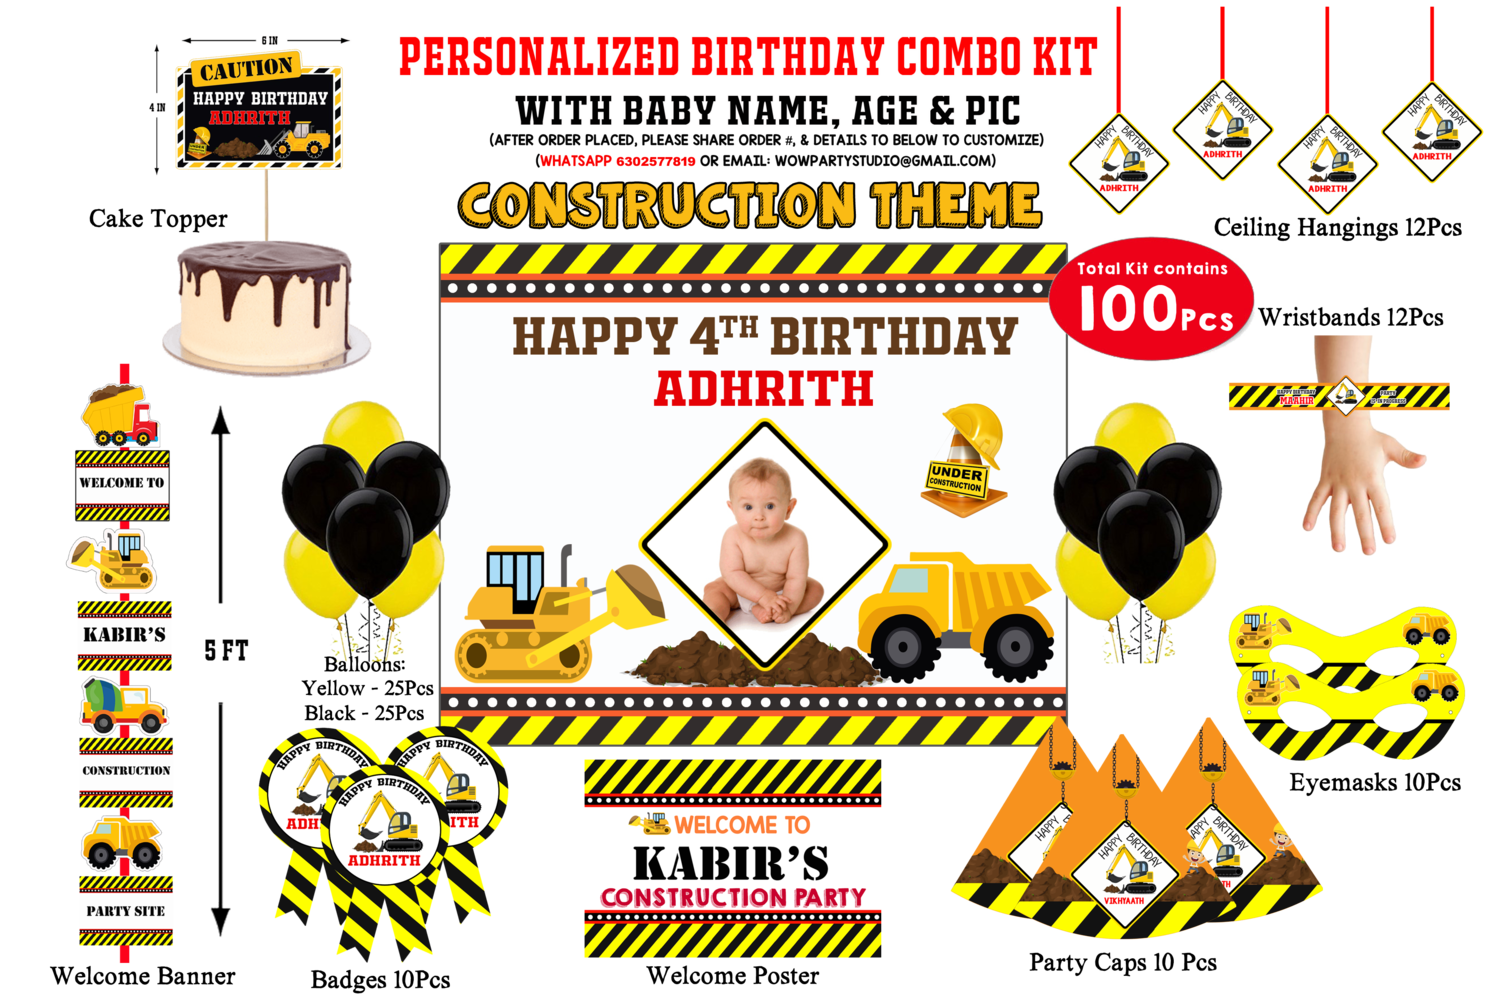 Construction Theme - Birthday Party Combo Kit